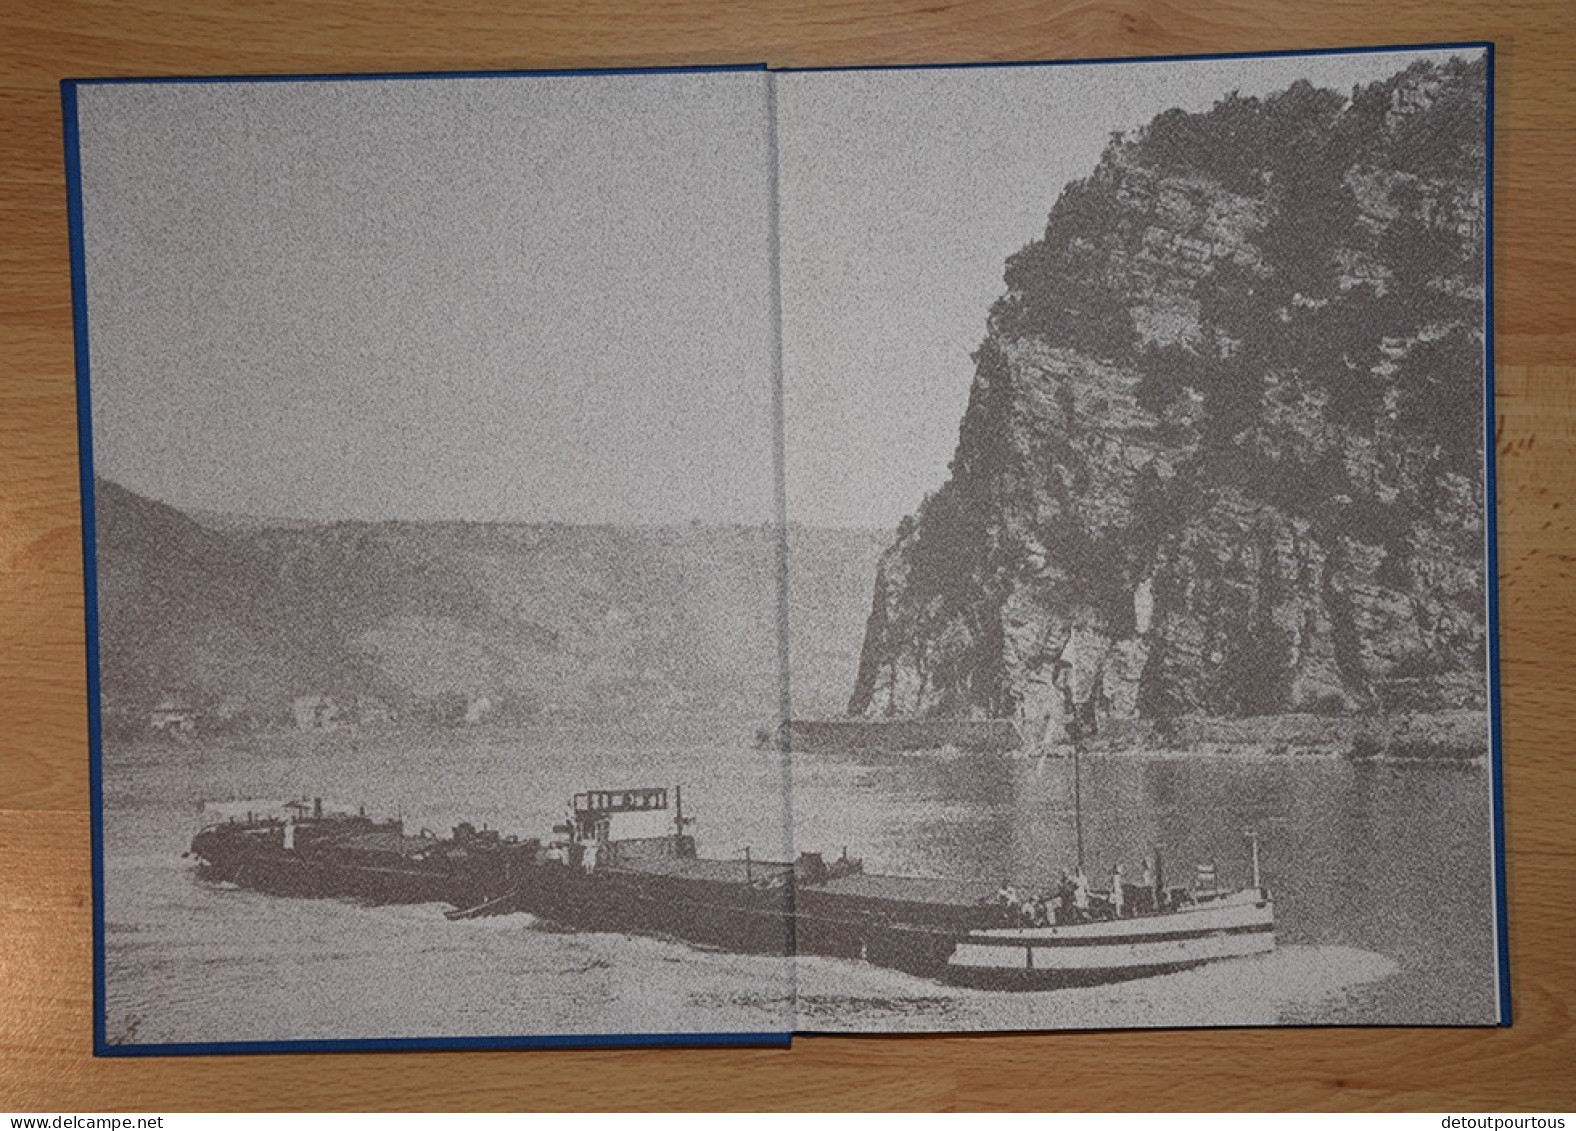 75 JAHRE ROBERT MULLER HAMBURG 1911 1986 Schiffahrt Schiff Gechichte Boat Company History - Transports